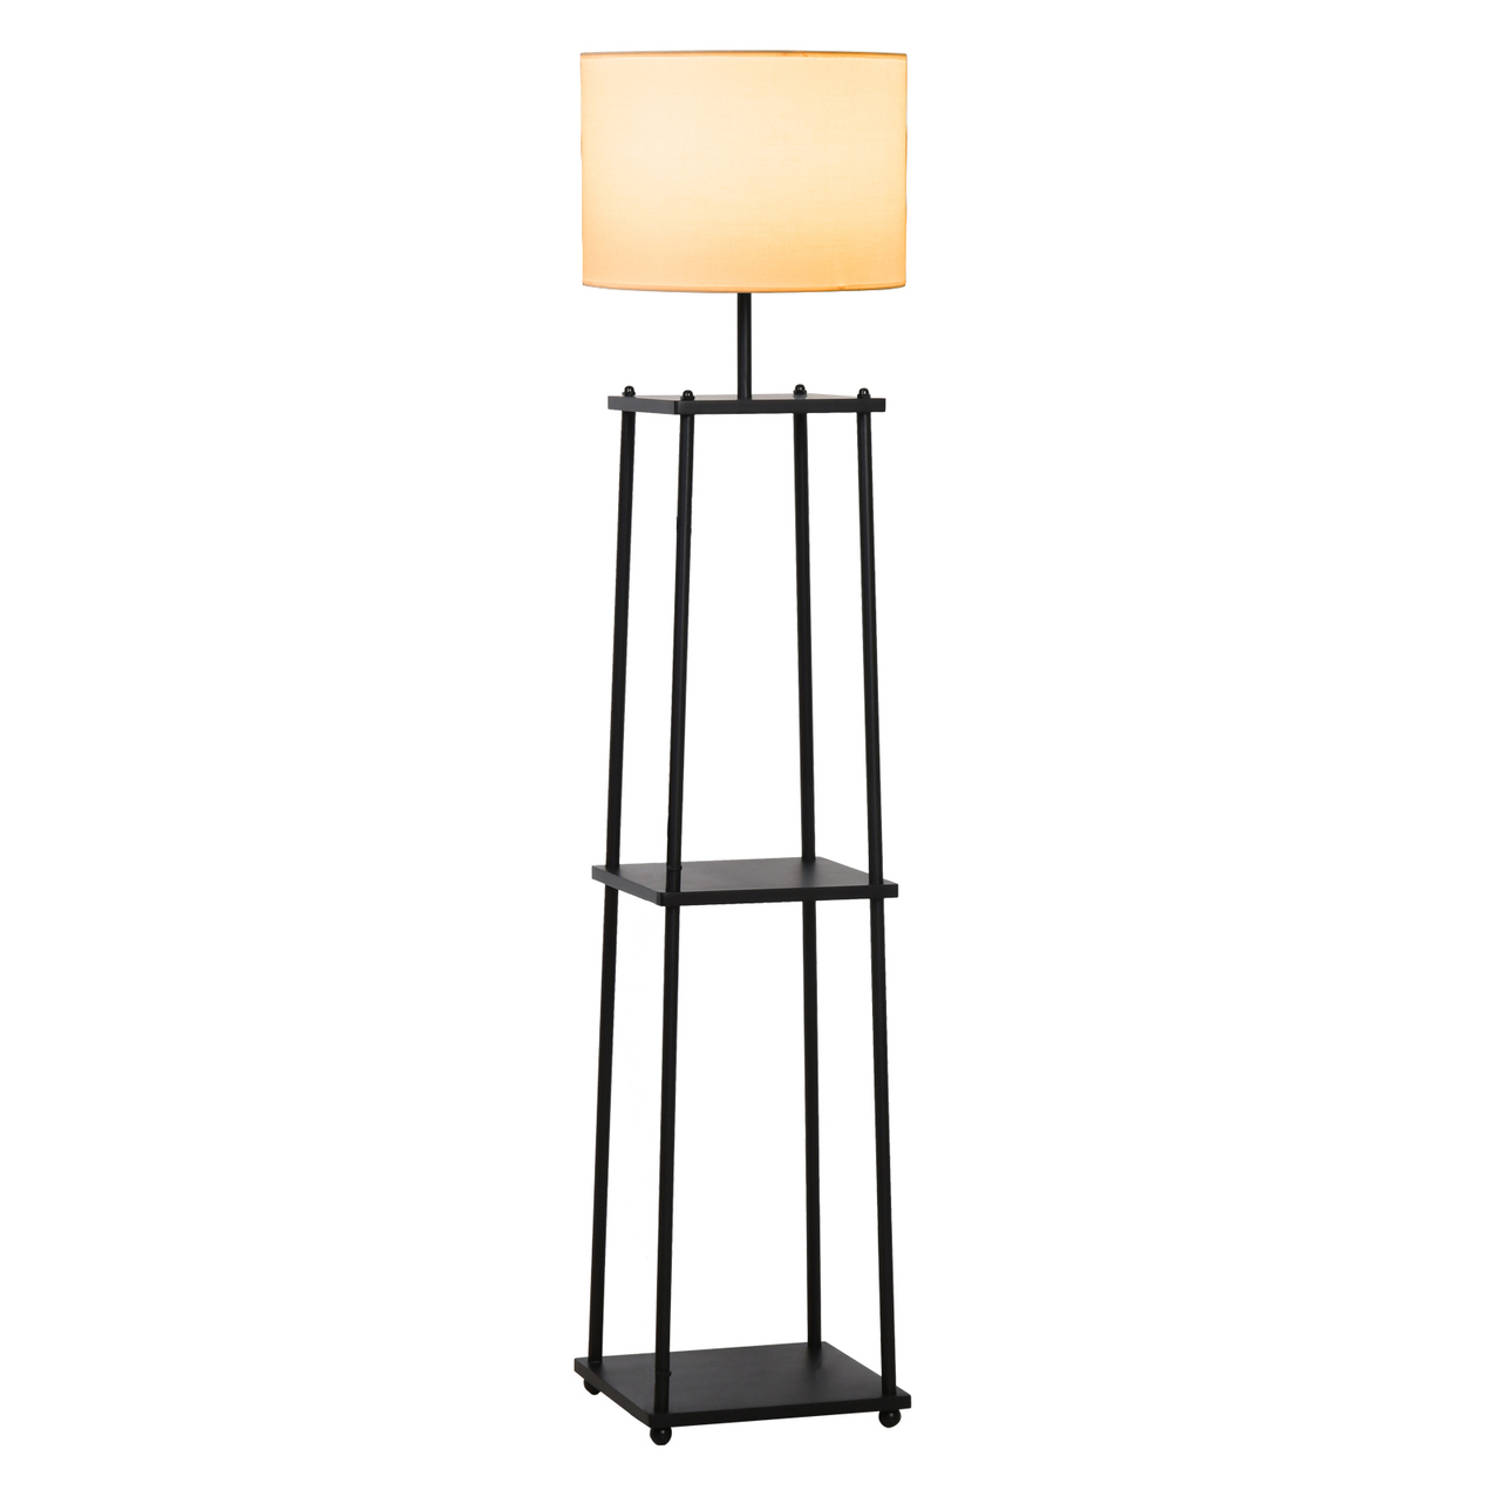 Vloerlamp met plank - lampen - staande lamp - stalamp - polyester/staal/ MDF - zwart + crème wit - 34,5 x 34,5 x 15...